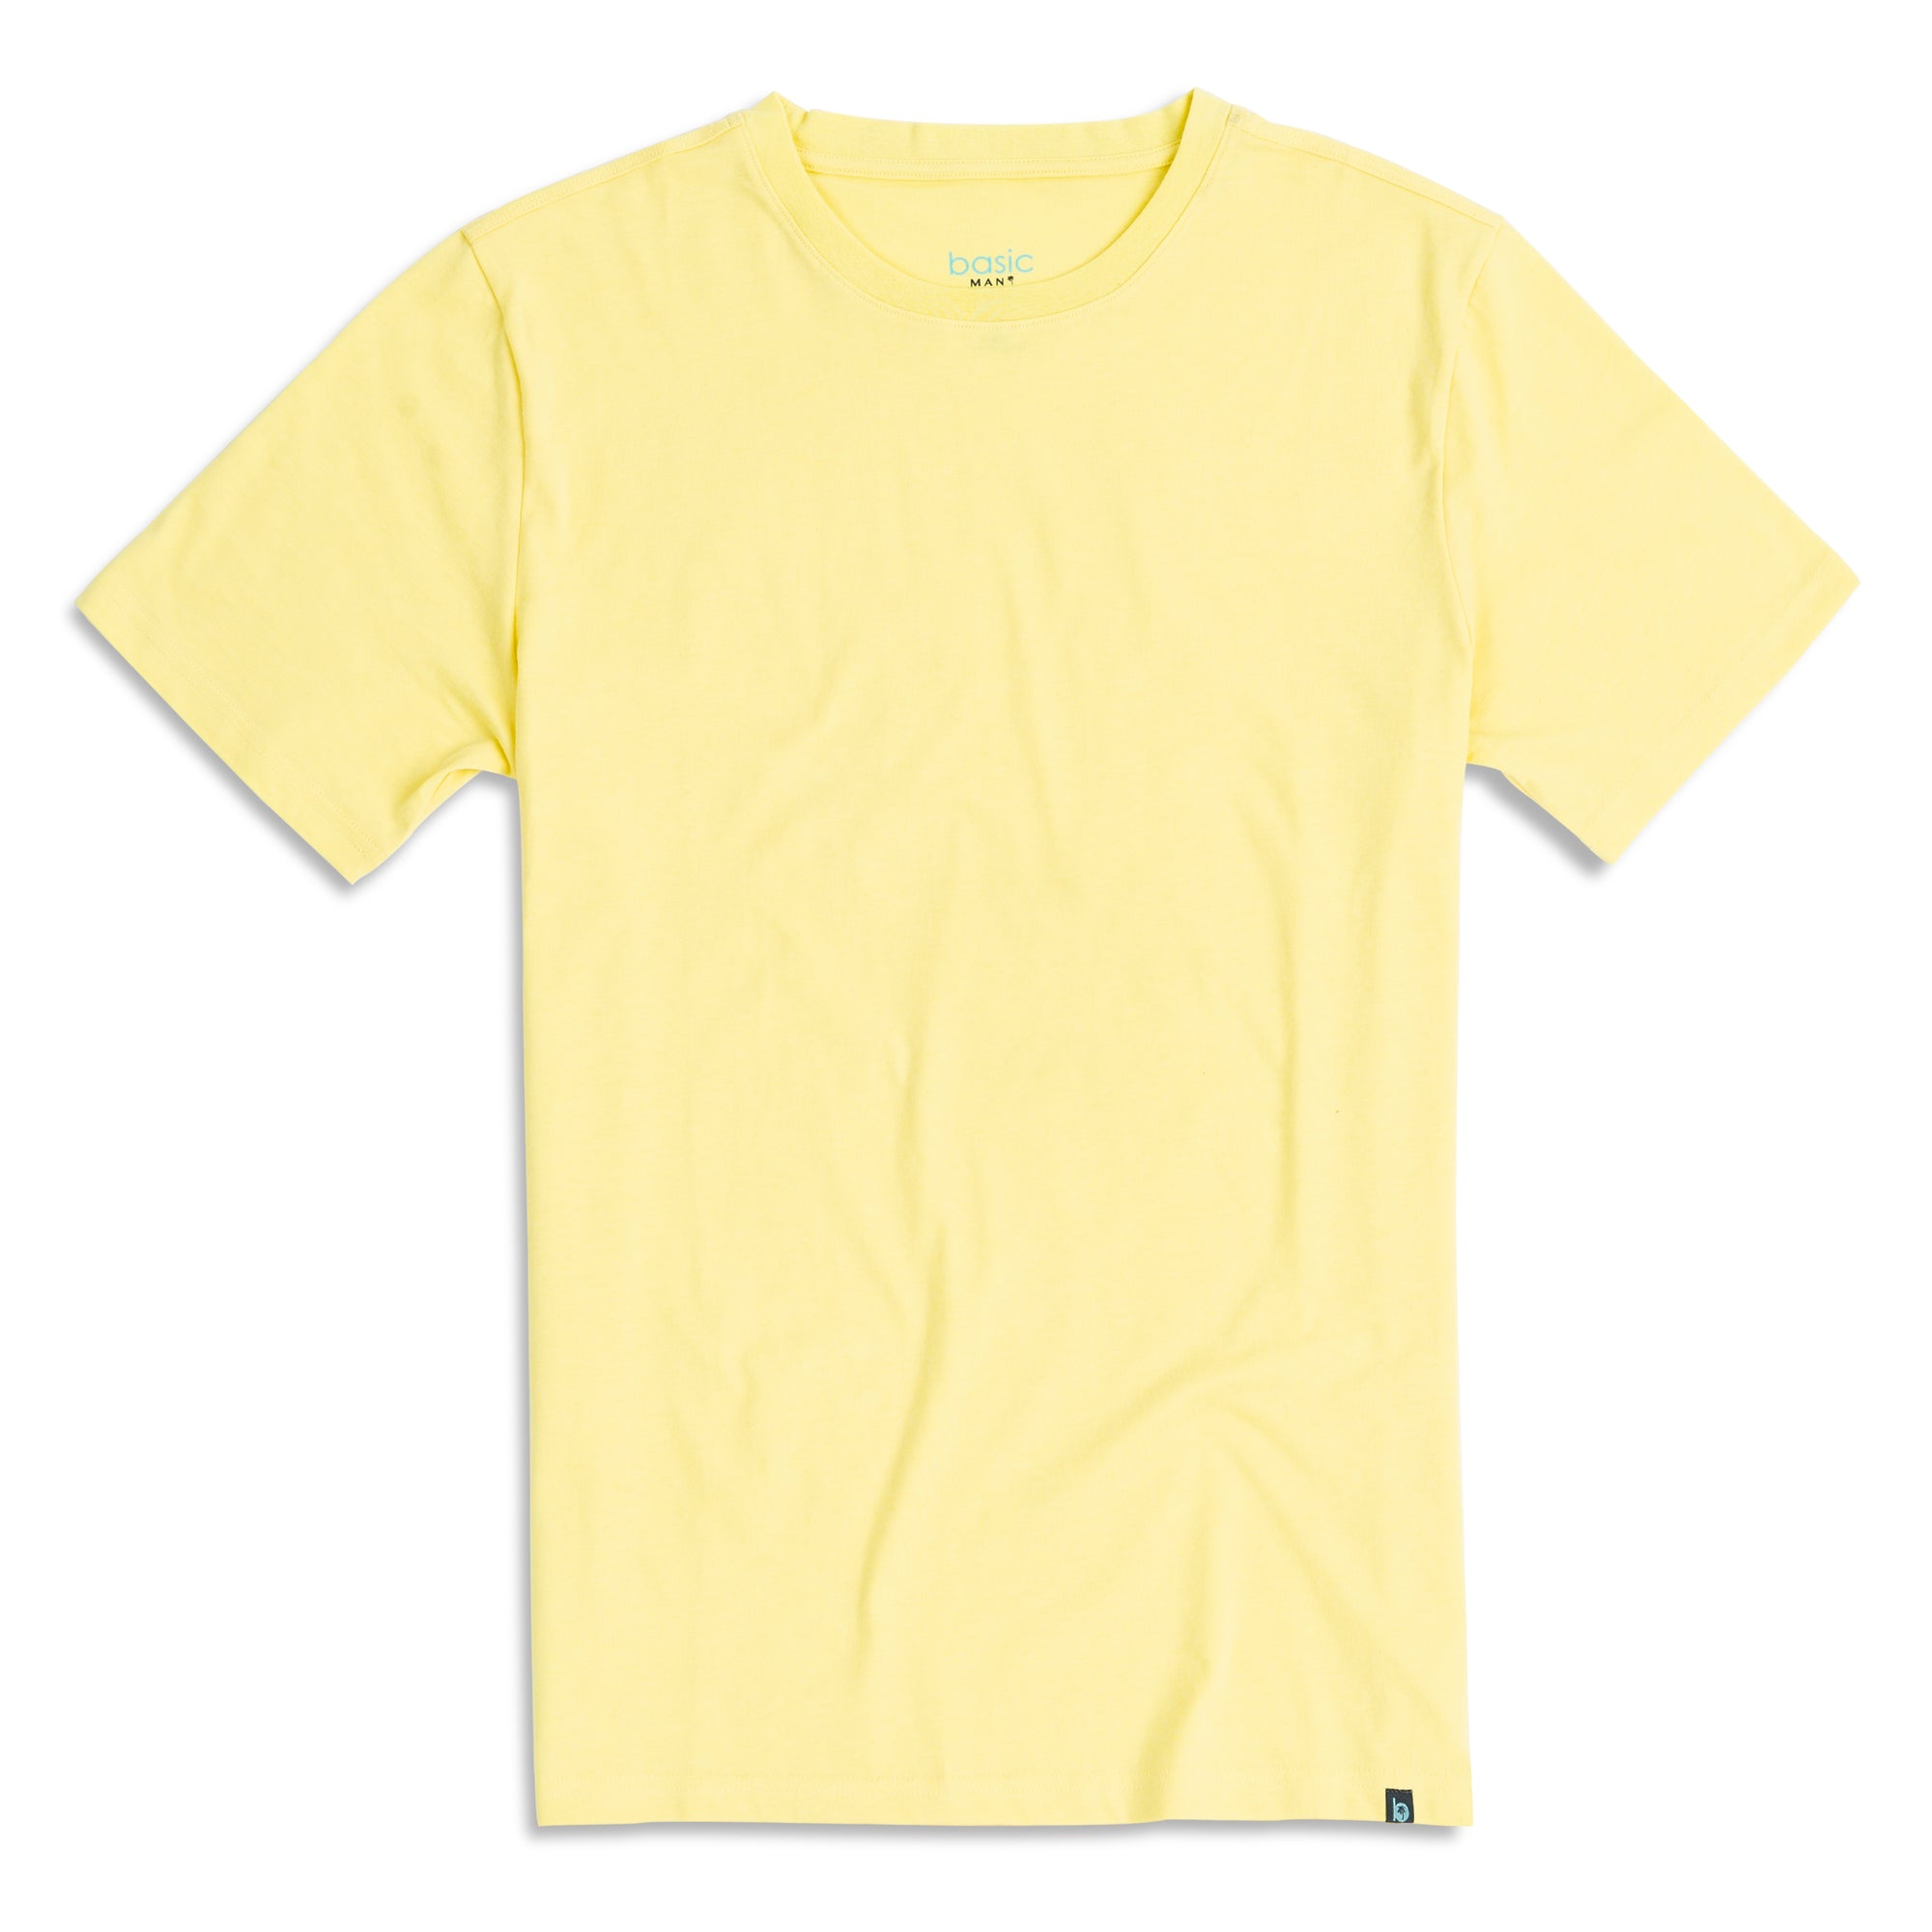 Heather Yellow Crew Neck Shirt Cotton